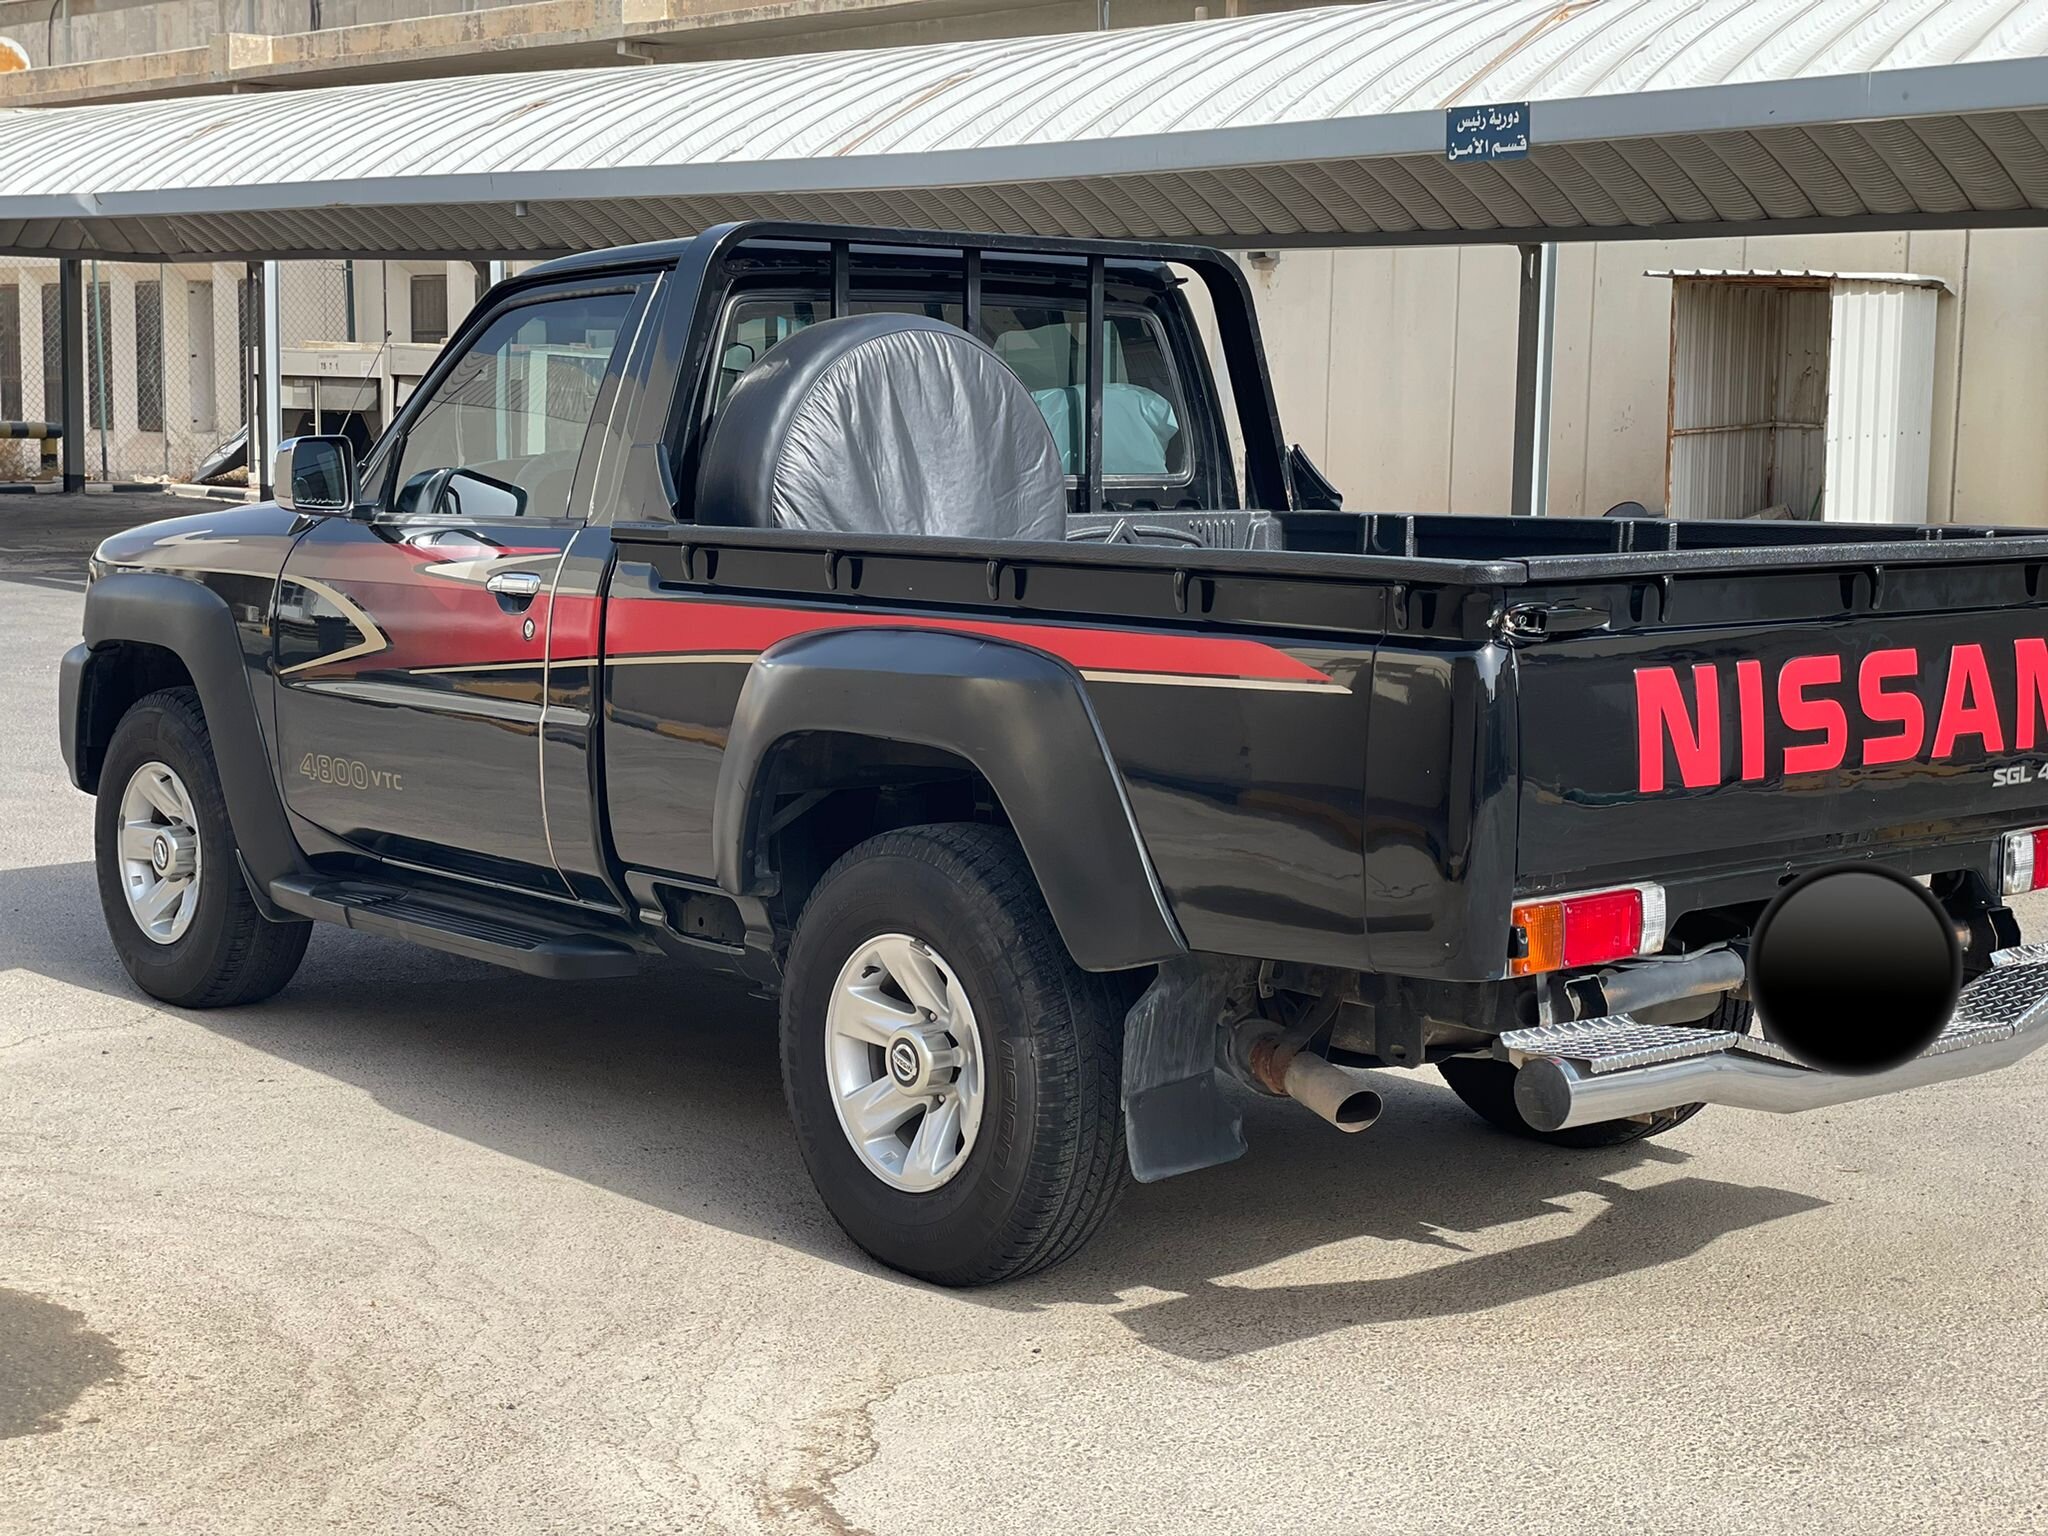 Nissan patrol pickup 2014 نيسان وانيت باترول ٢٠١٤3.jpeg